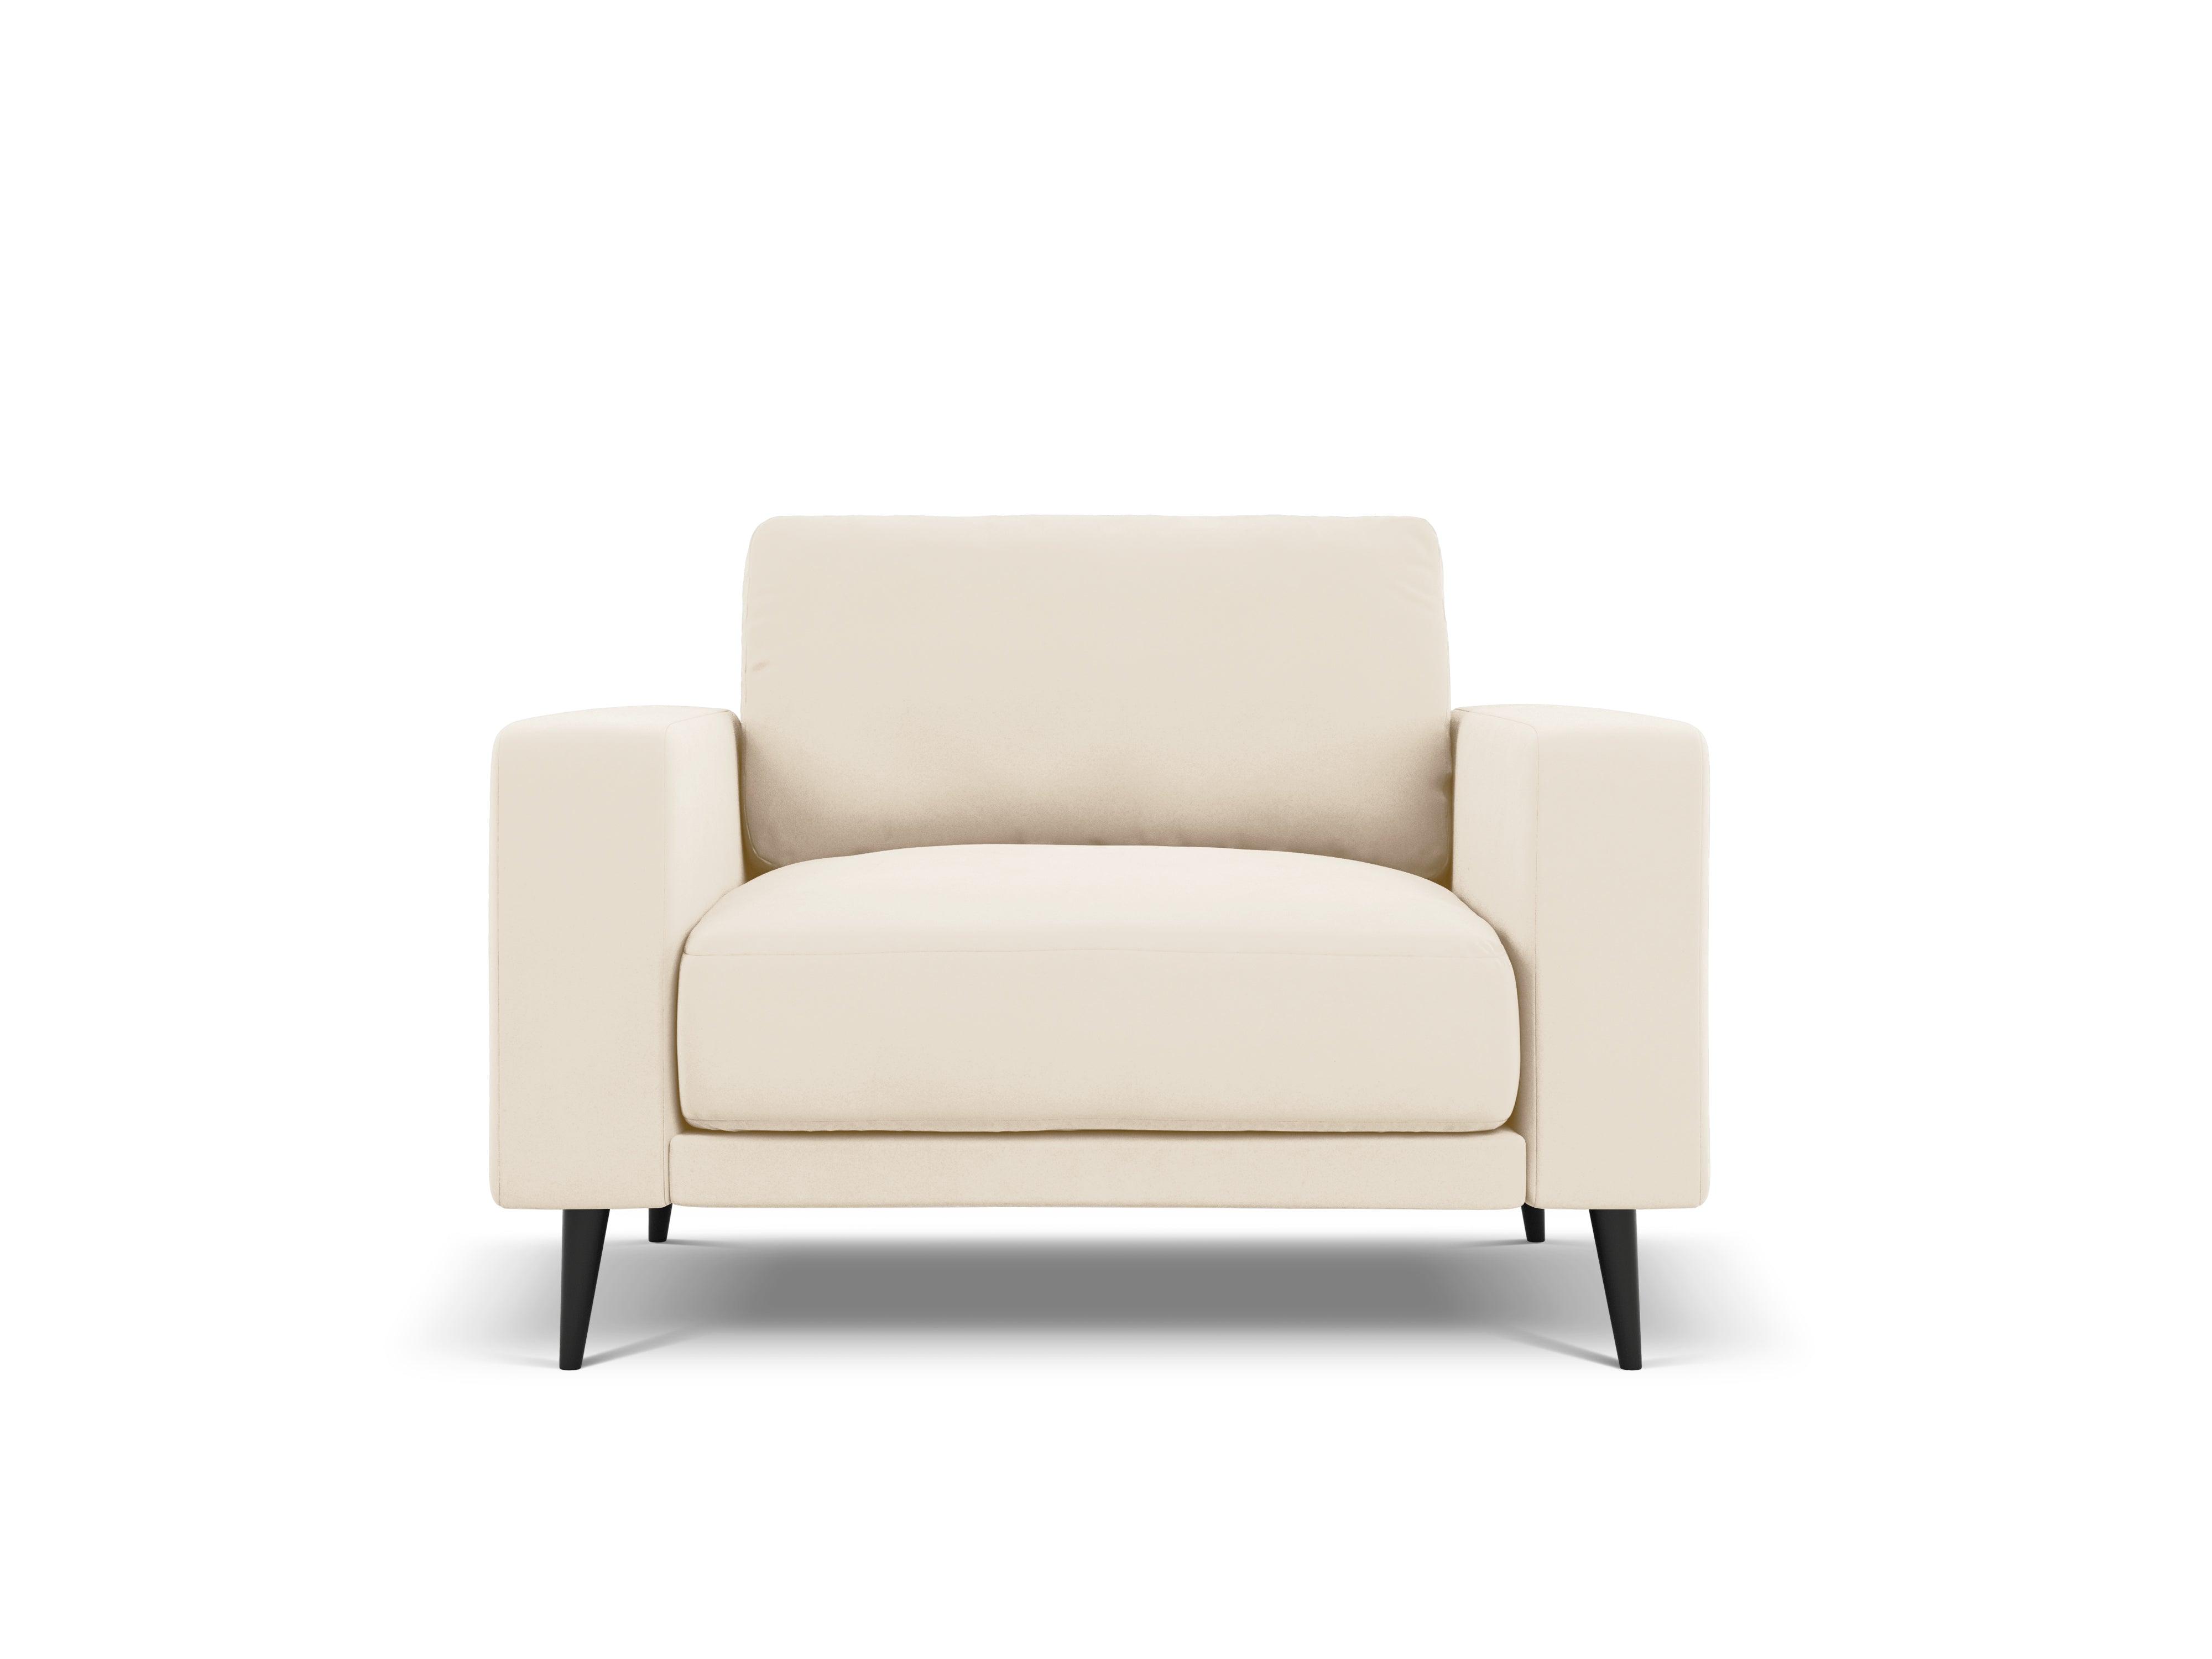 Velvet Armchair, "Kylie", 1 Seat, 97x90x80
Made in Europe, Micadoni, Eye on Design